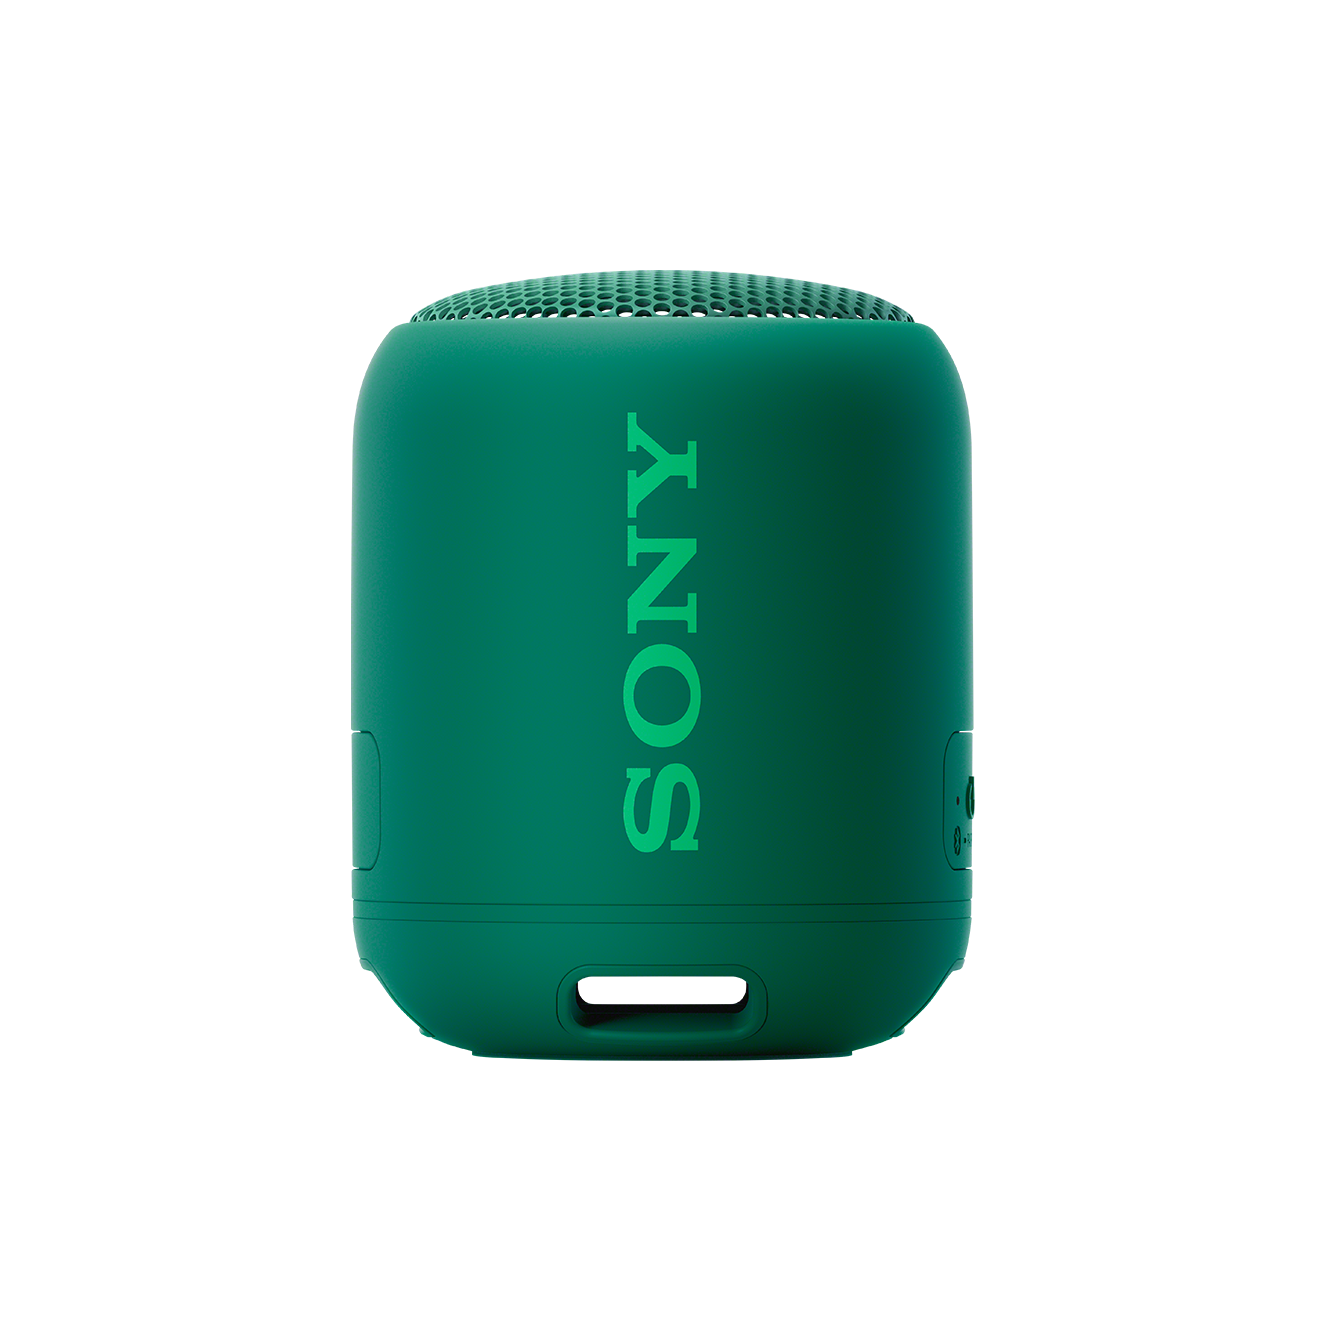 SRS-XB12 Lautsprecher, SONY Wasserfest Grün, Bluetooth